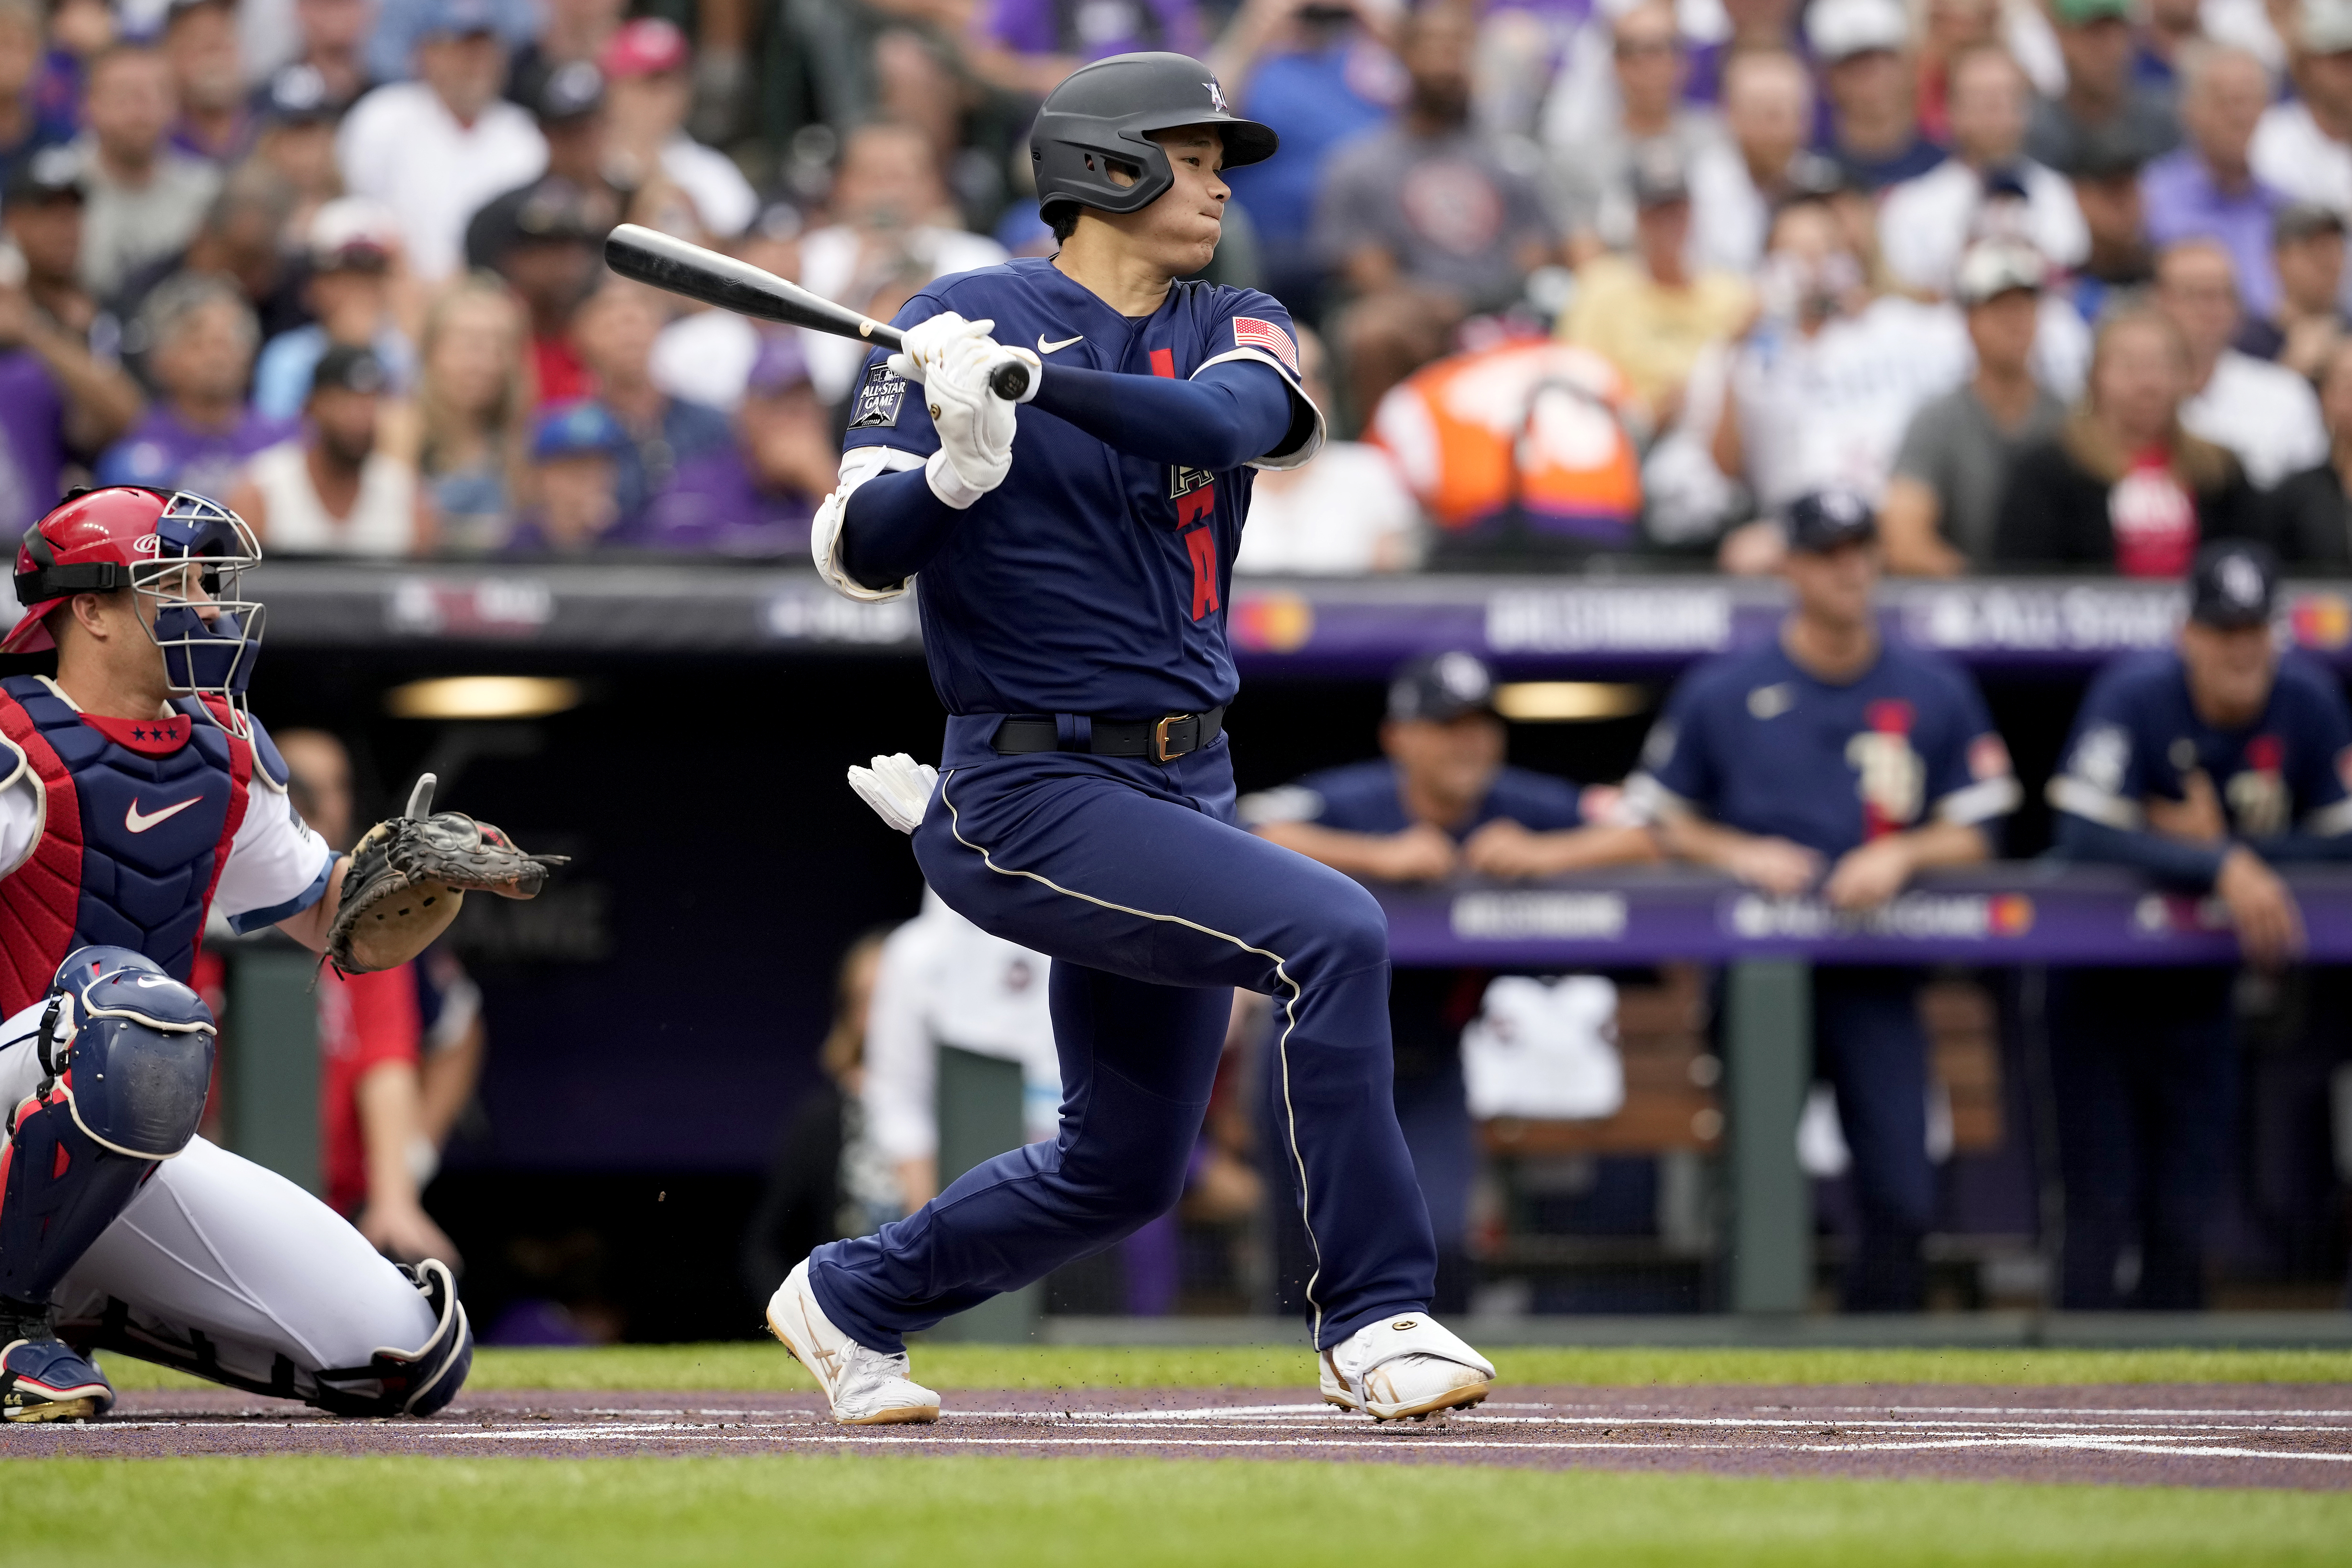 MLB presented the uniforms of the All-Star Game 2018 — jori8 on Scorum